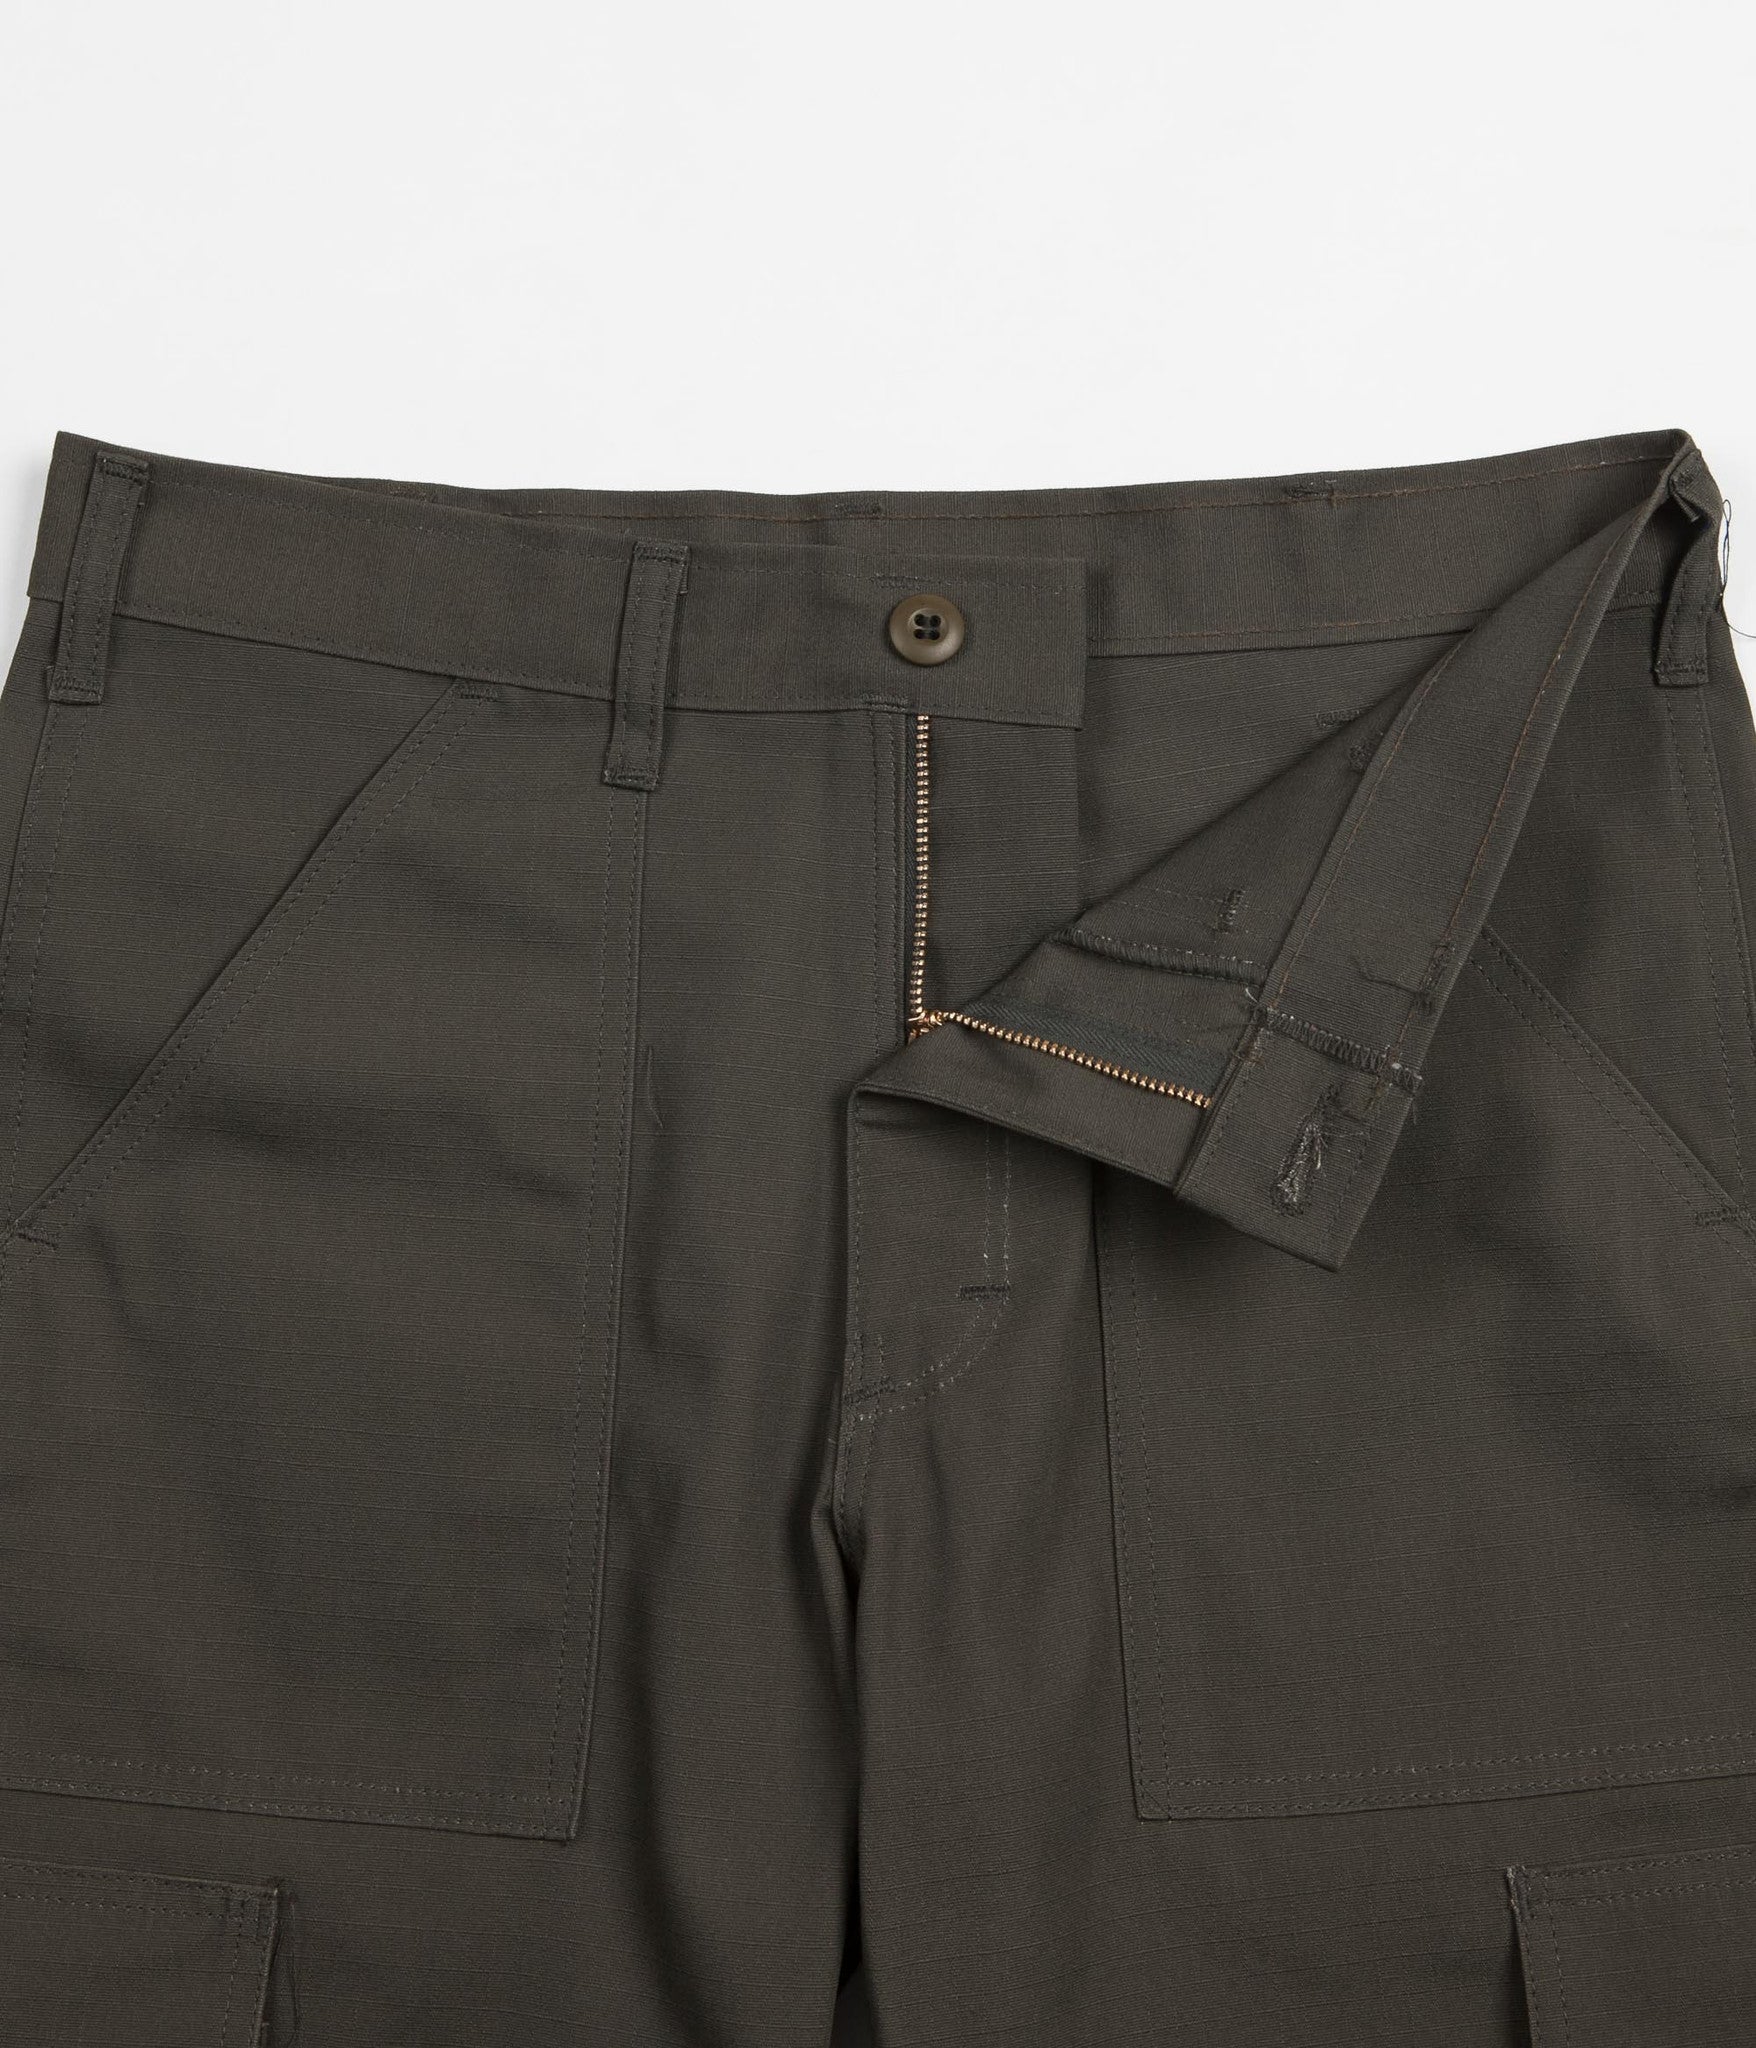 Stan Ray 6 Pocket Cargo Shorts - Olive Ripstop | Flatspot